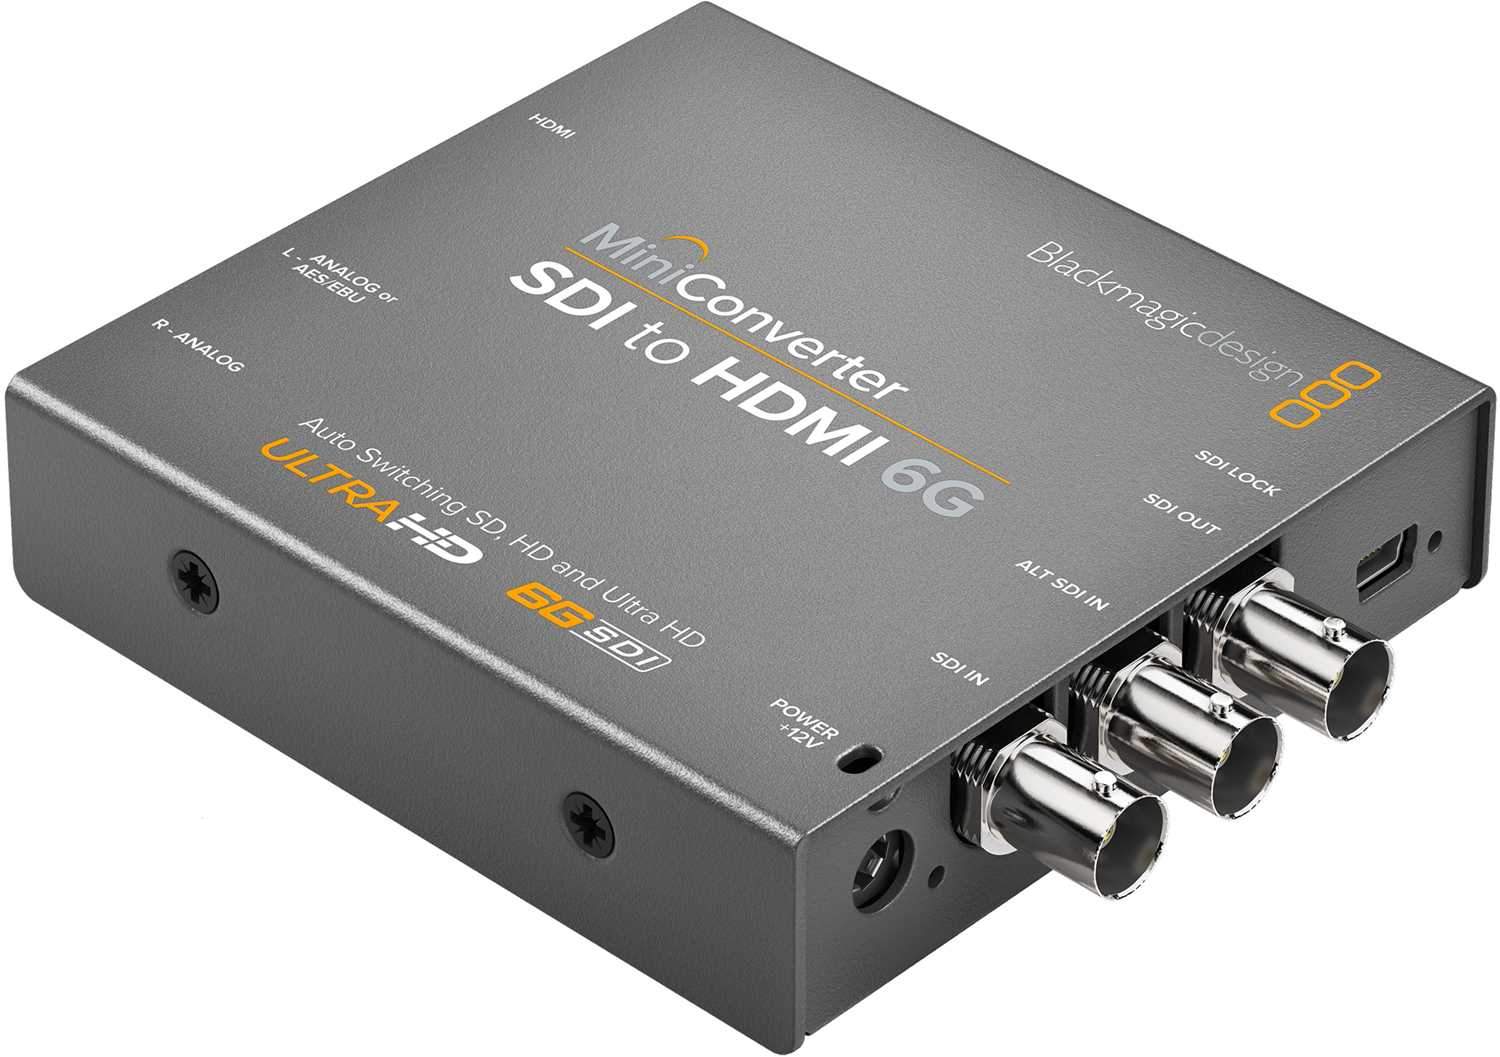 Blackmagic Design Mini Converter SDI to HDMI 6G - ProSound and Stage Lighting